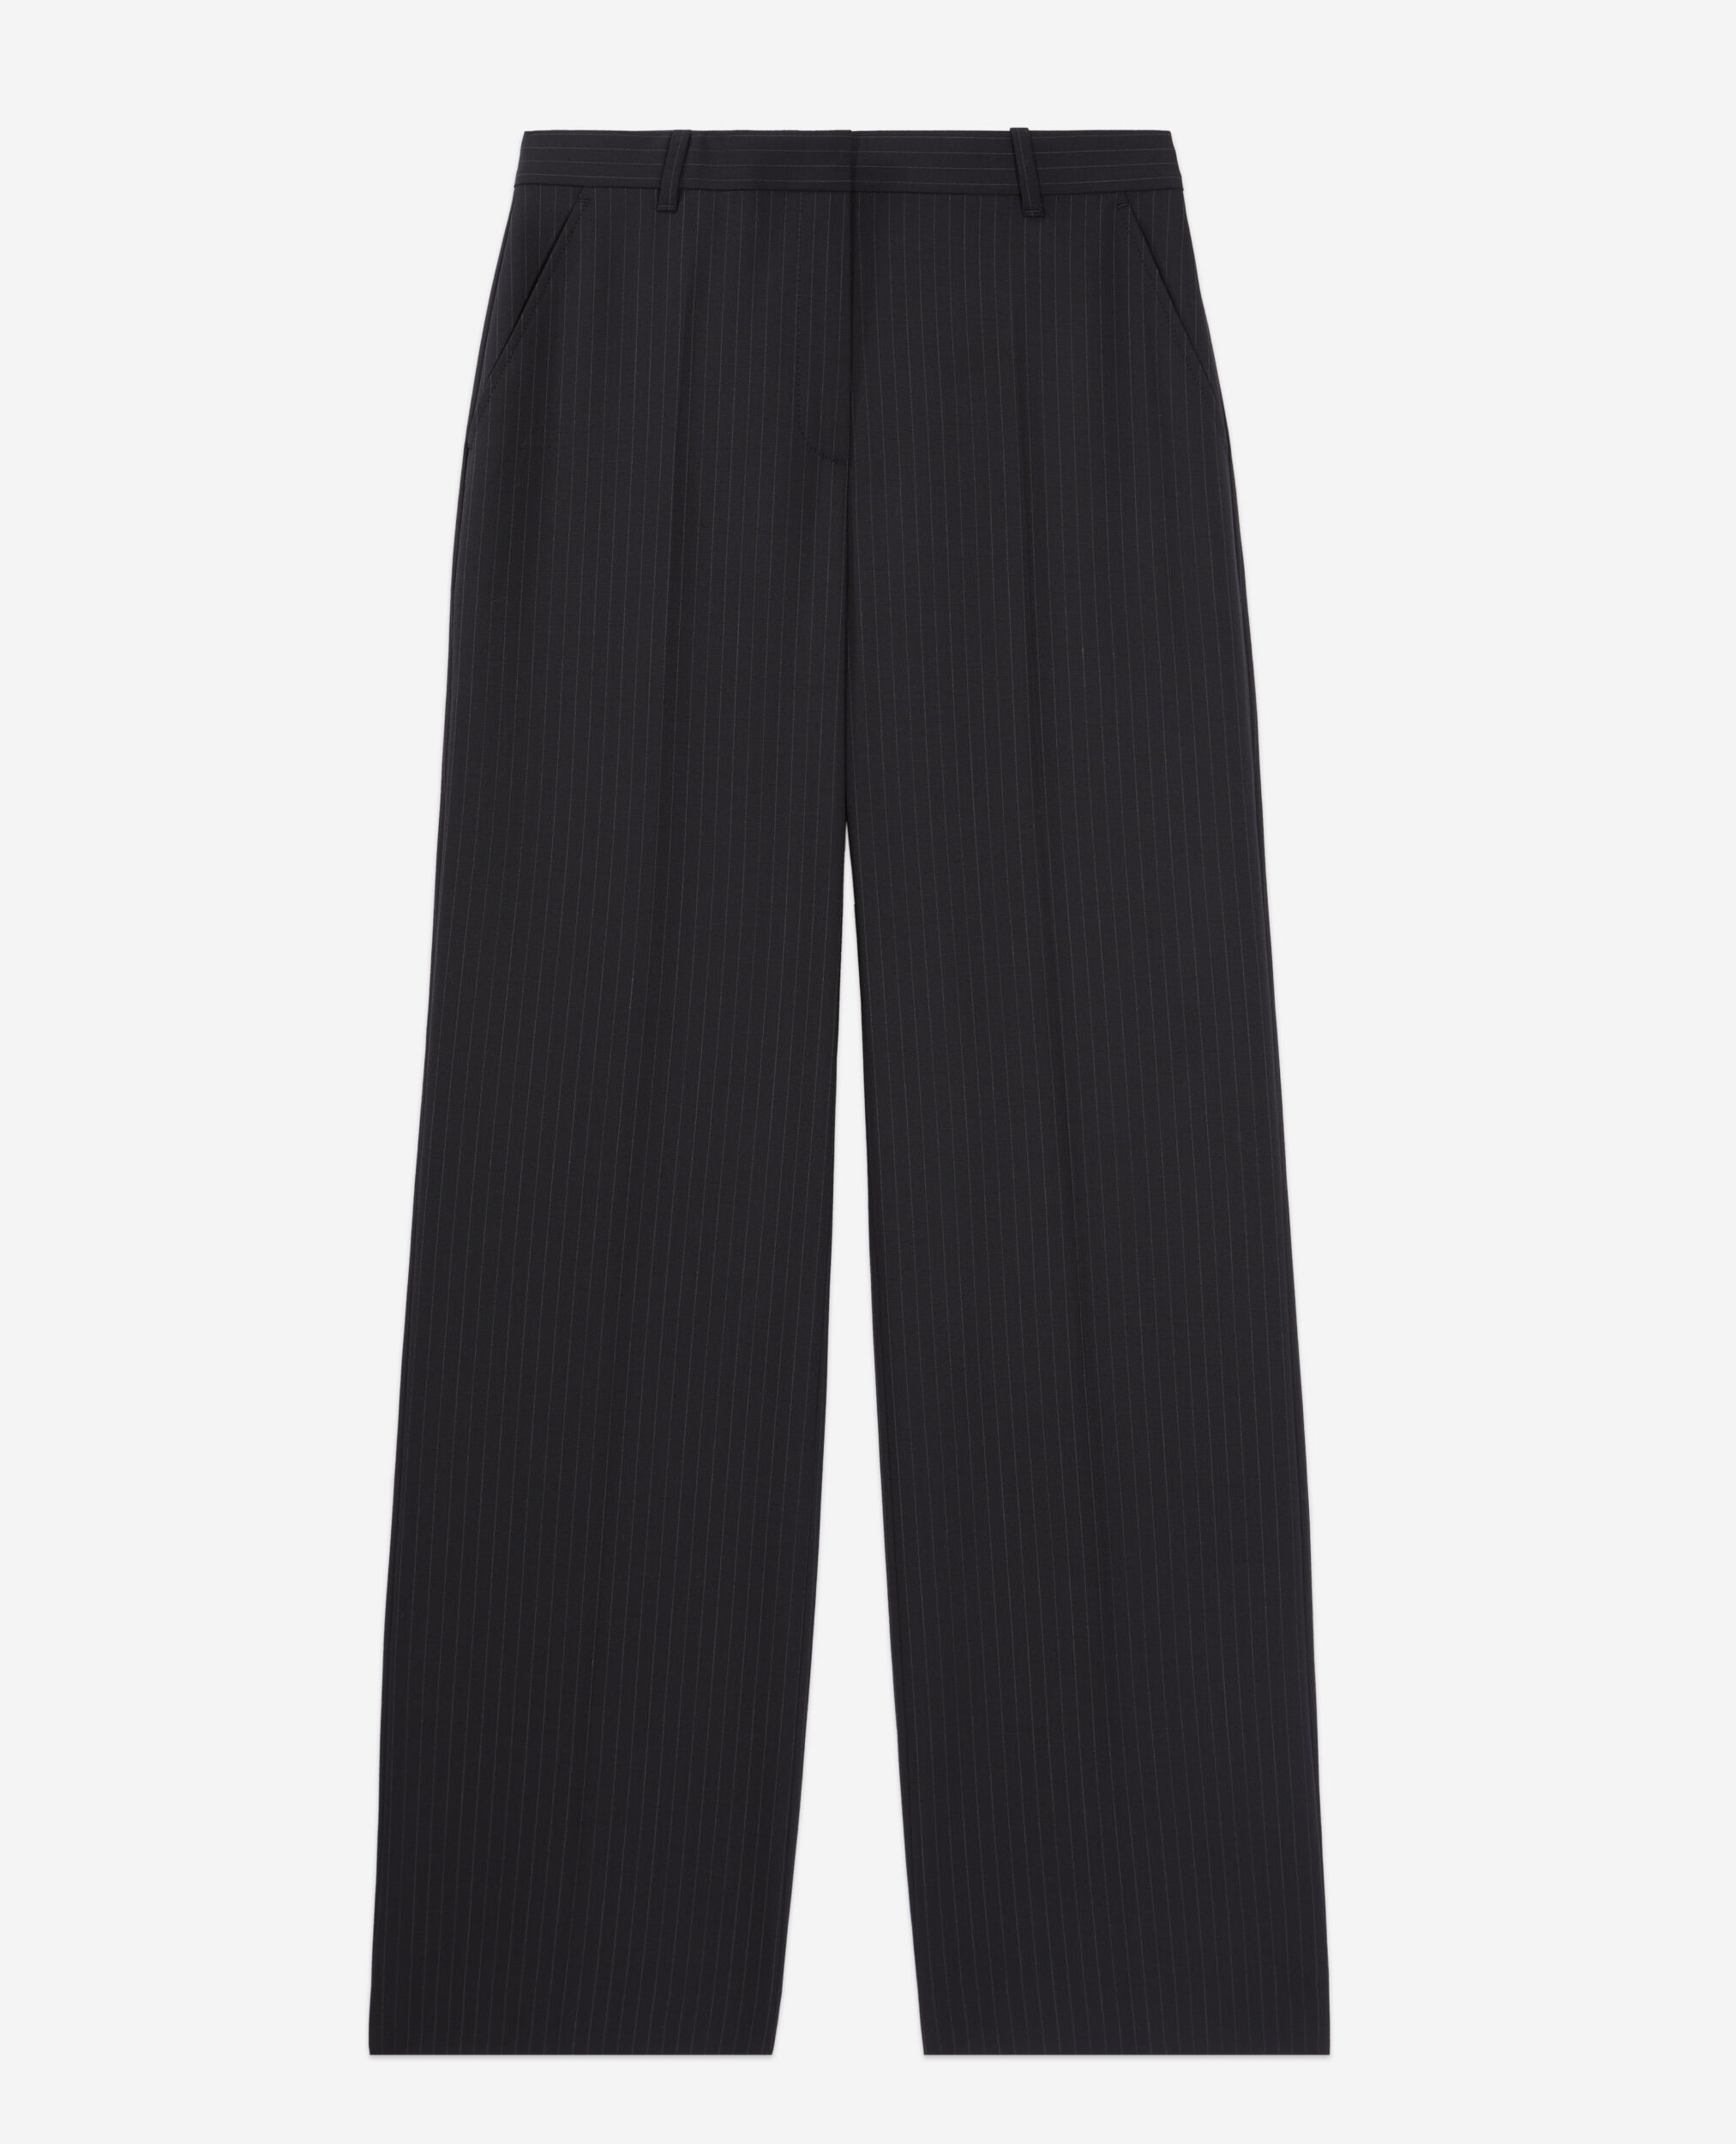 Pantalón traje negro rayas mezcla lana, BLACK WHITE, hi-res image number null